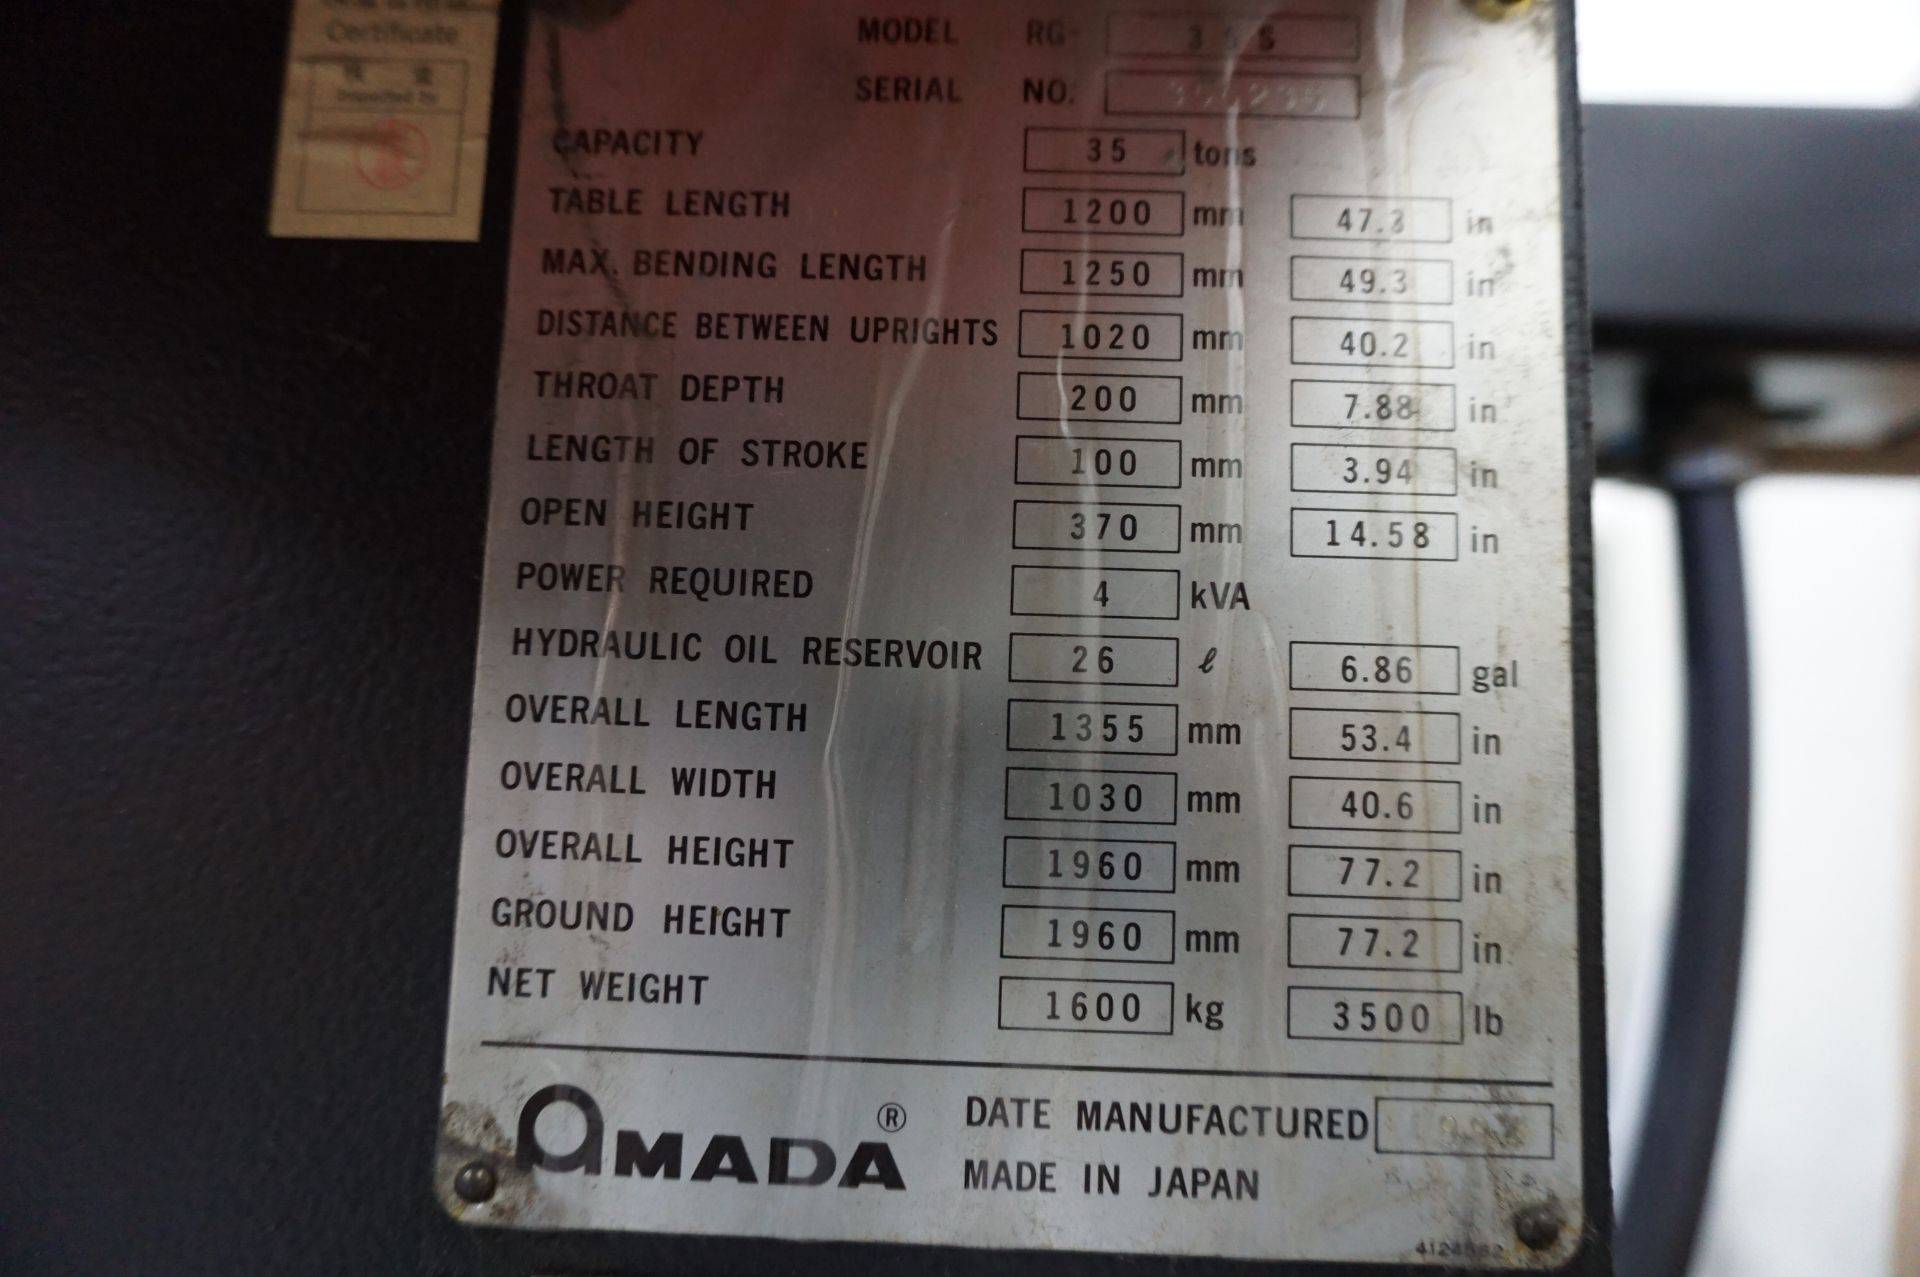 1994 AMADA RG-35S PRESS BRAKE S/N 356236 CAPACITY 35 TONS, TABLE LENGTH 47.3", MAX BENDING LENGTH - Bild 11 aus 14